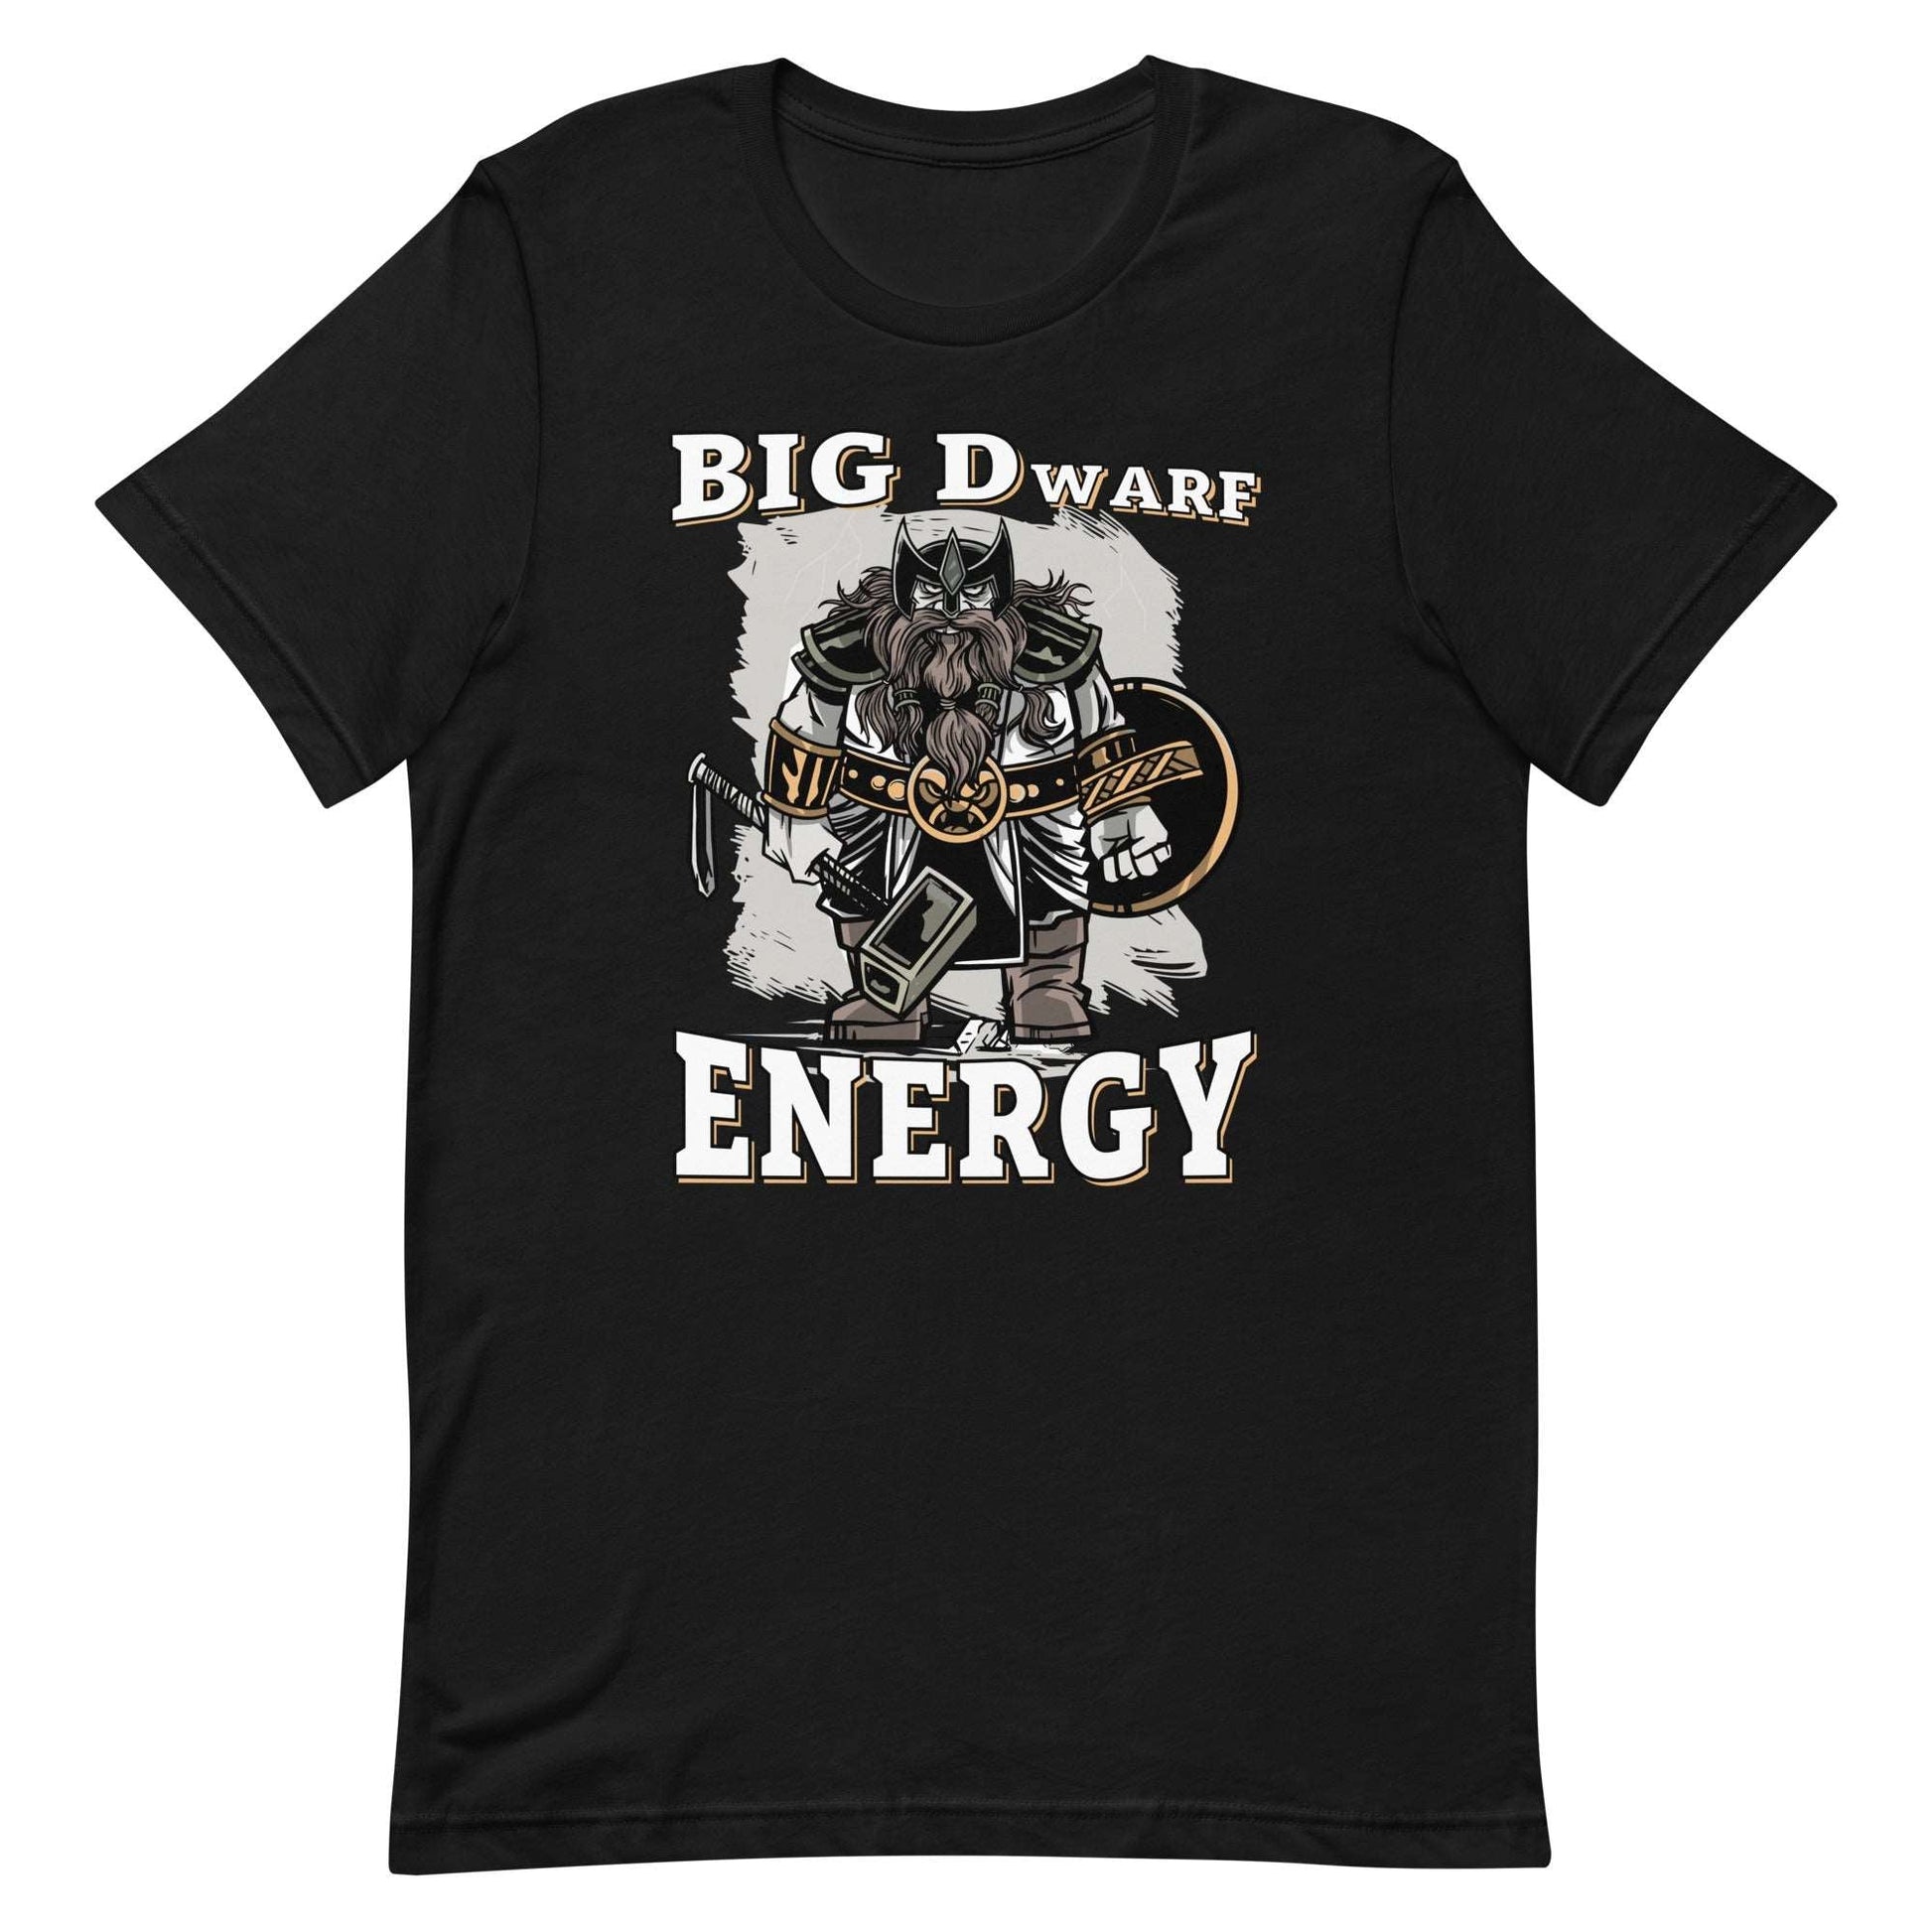 Big D (Dwarf) Energy T-Shirt - Funny Fantasy Dwarf Tee T-Shirt Black / S